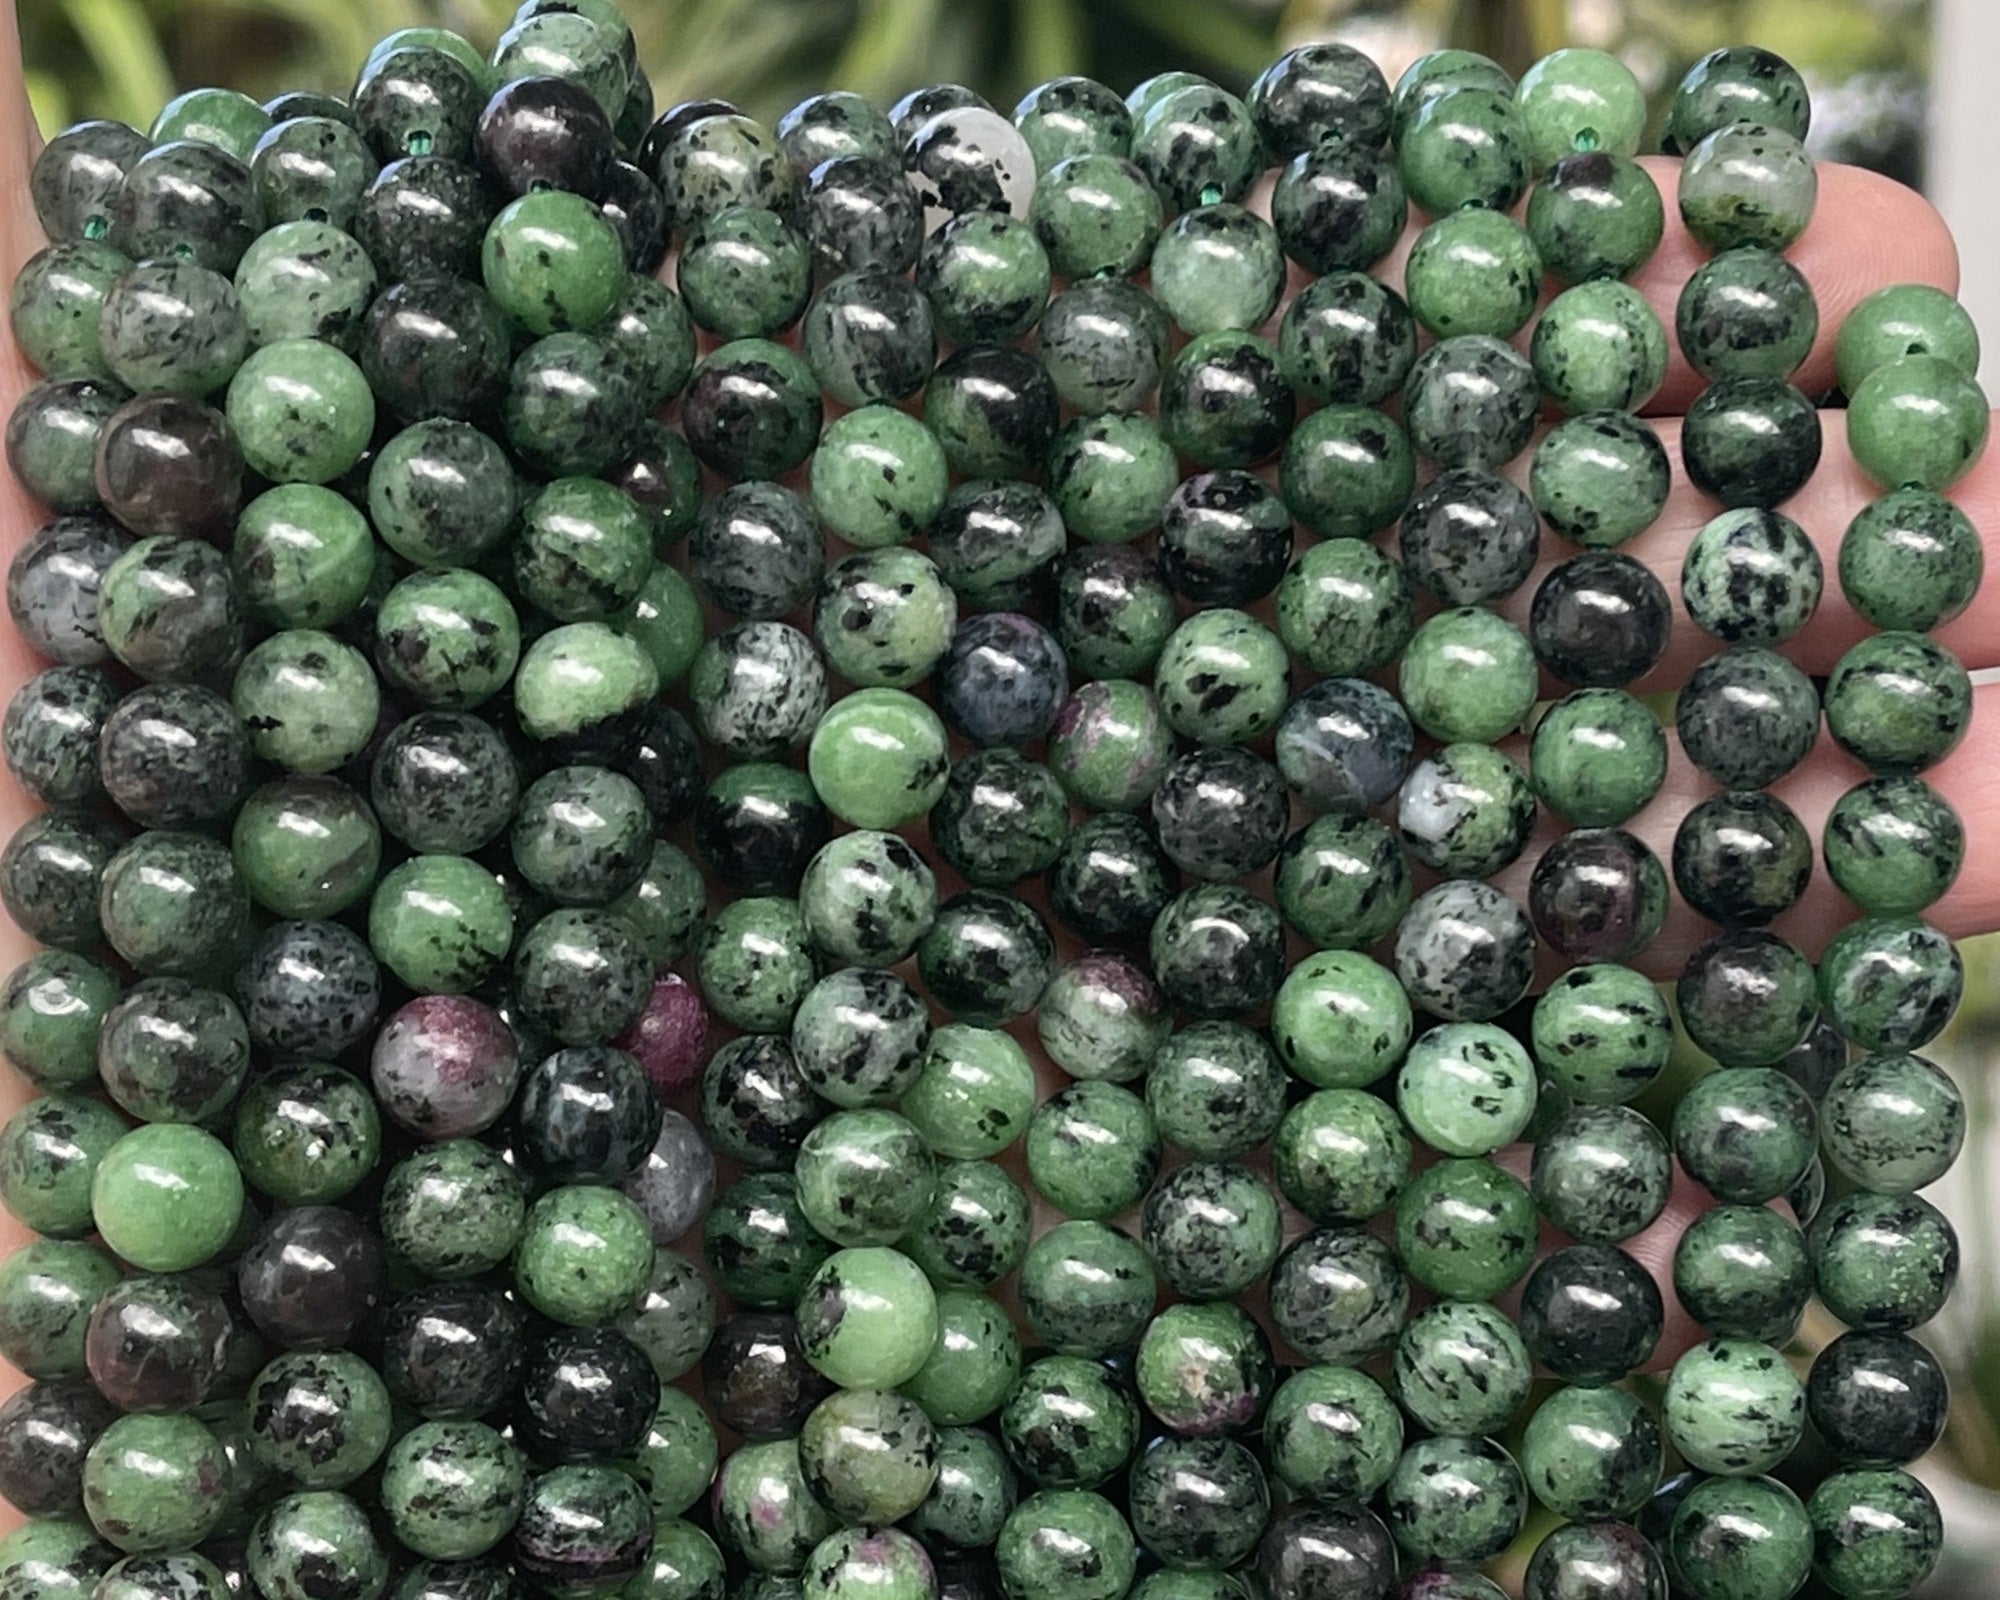 Ruby Zoisite 8mm round natural gemstone beads 15" strand - Oz Beads 